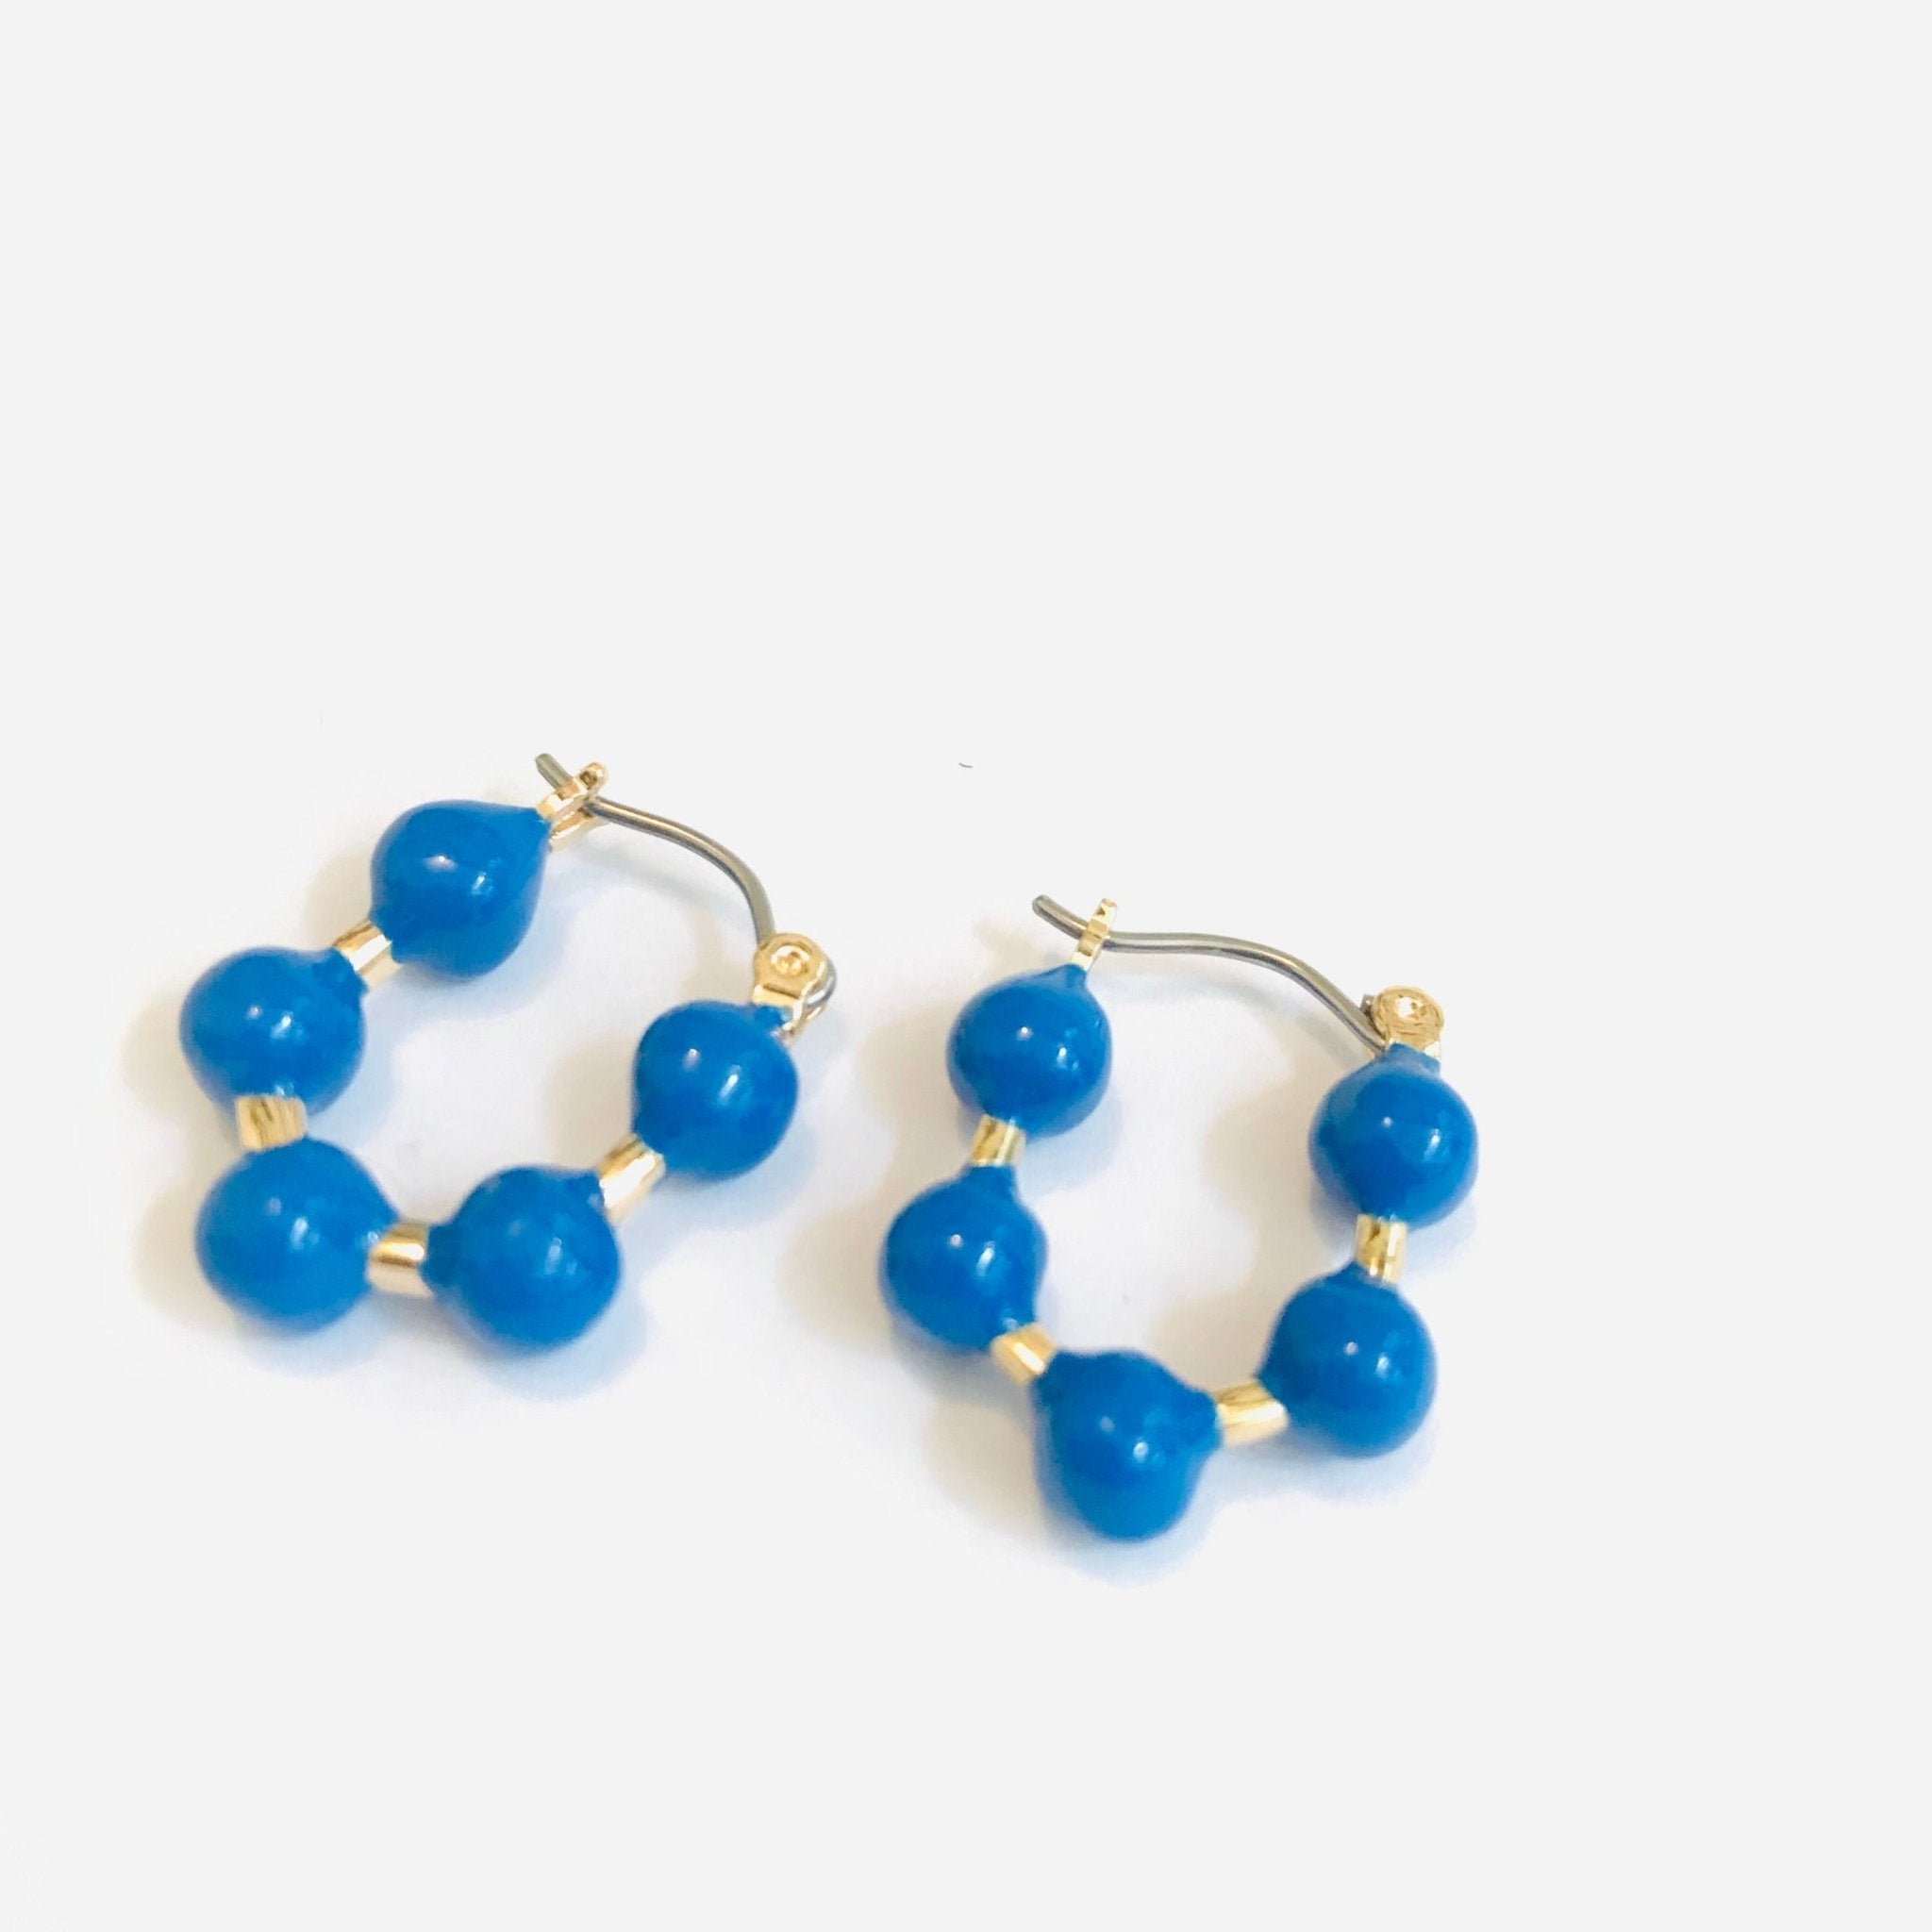 Diana Beaded Hoop Earrings - The Nancy Smillie Shop - Art, Jewellery & Designer Gifts Glasgow